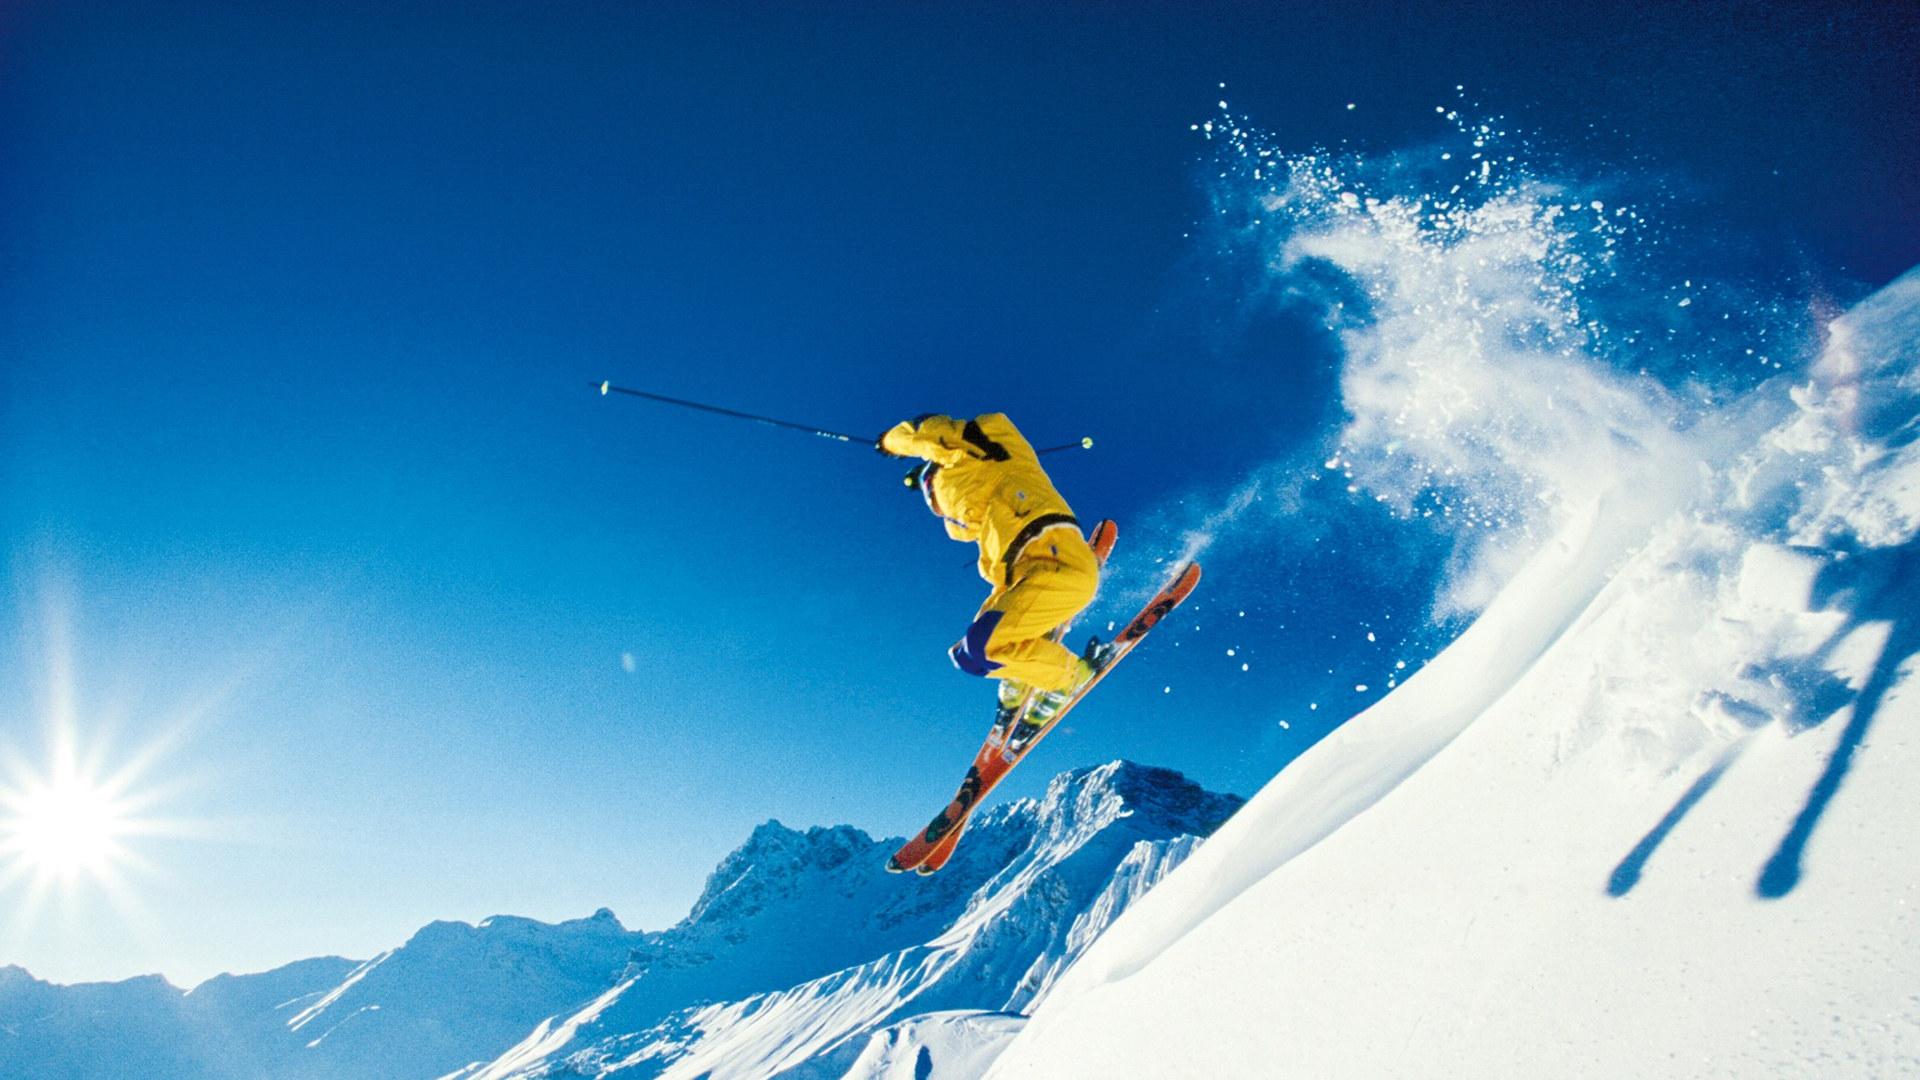 1920x1080 Mountain skiing - Alps holiday wallpaper Desktop ...